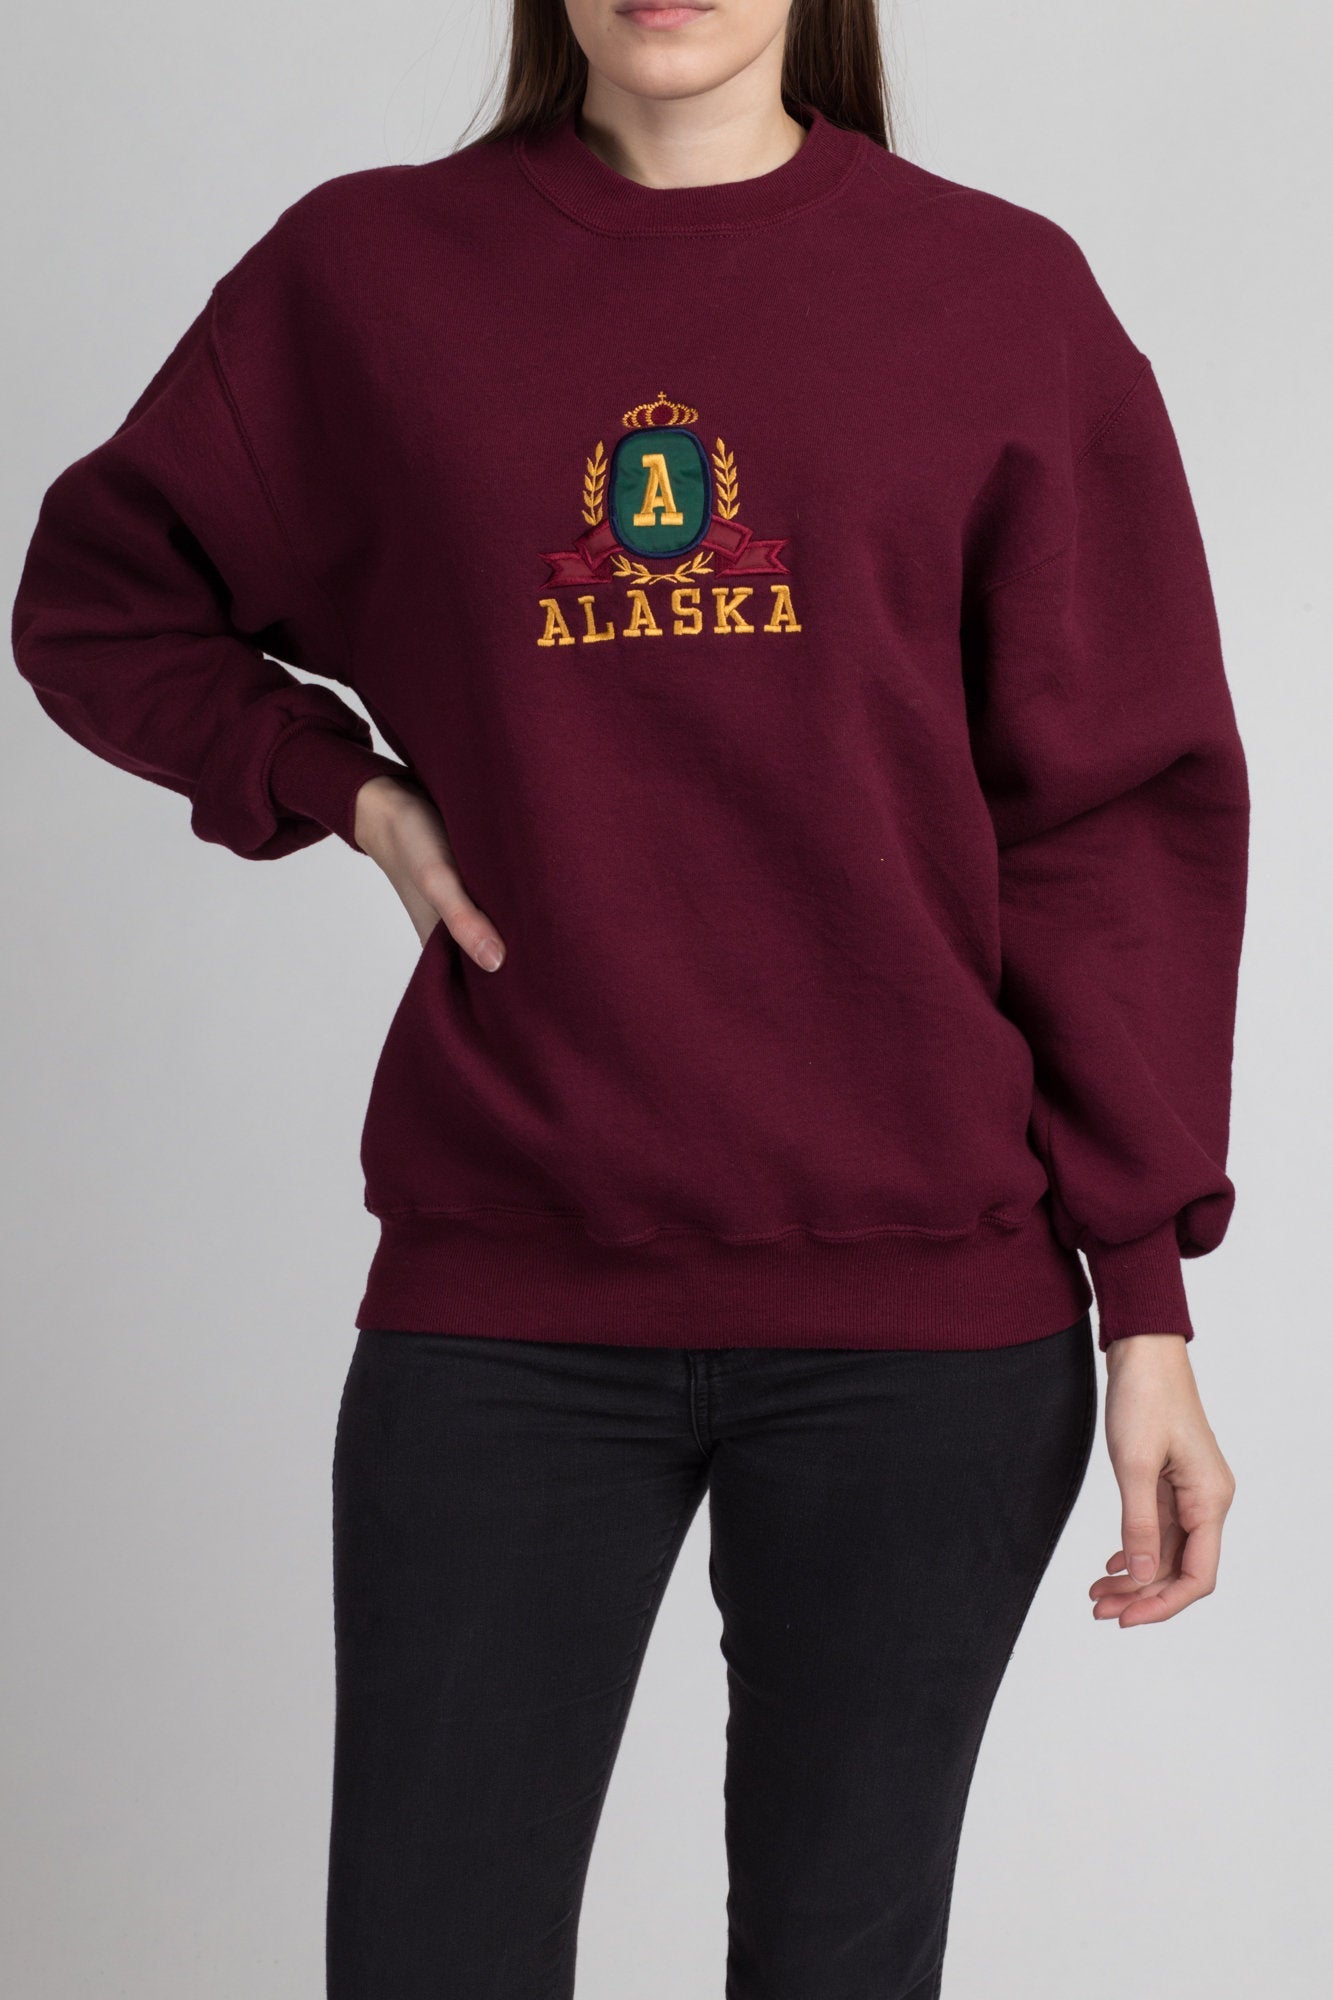 90s Alaska Sweatshirt - Men's Medium, Women's Large – Apple Vintage